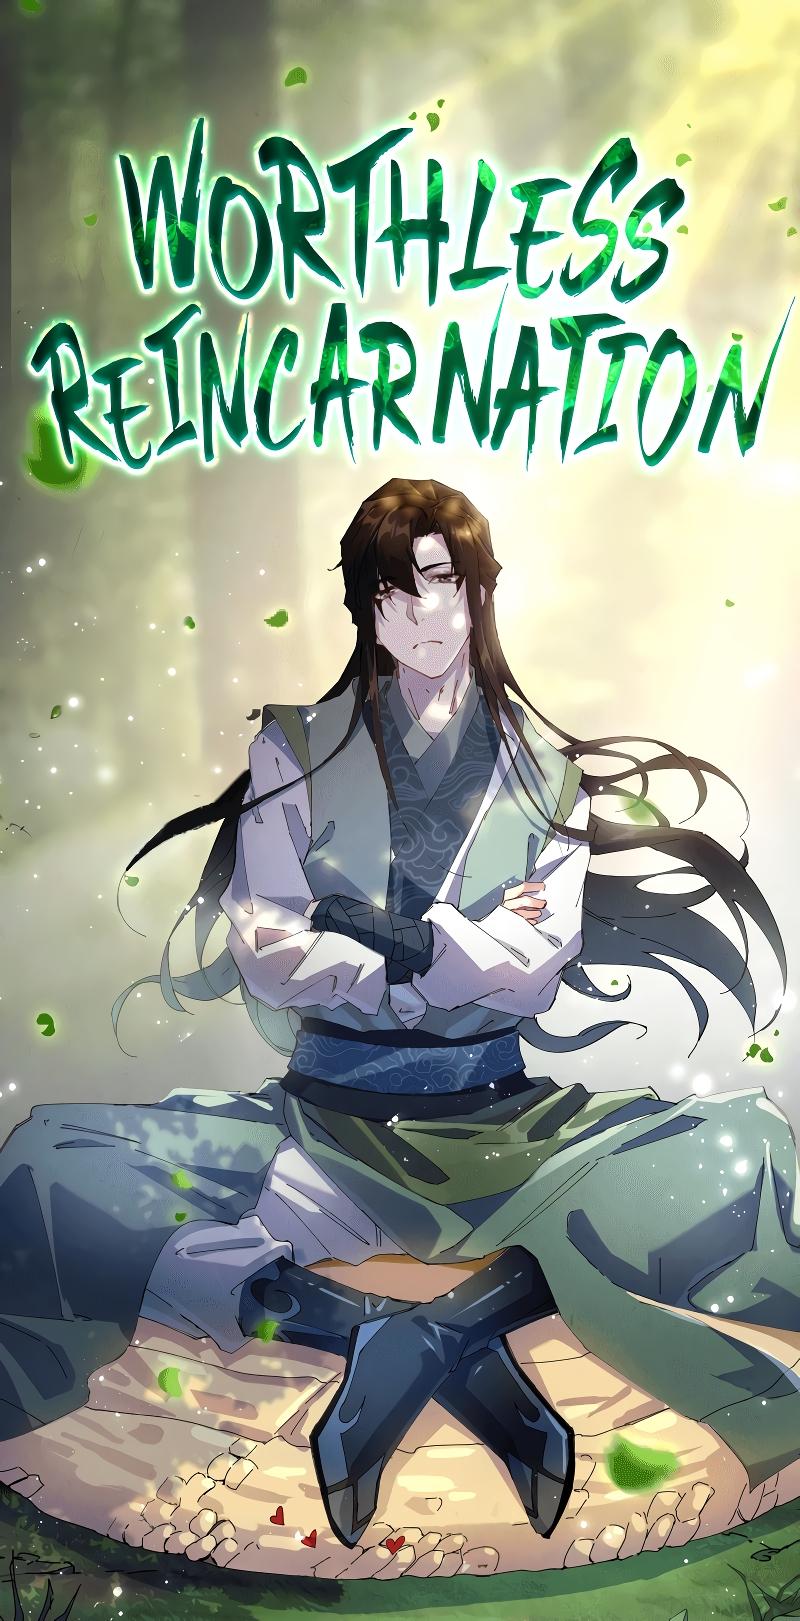 Worthless Reincarnation cover image